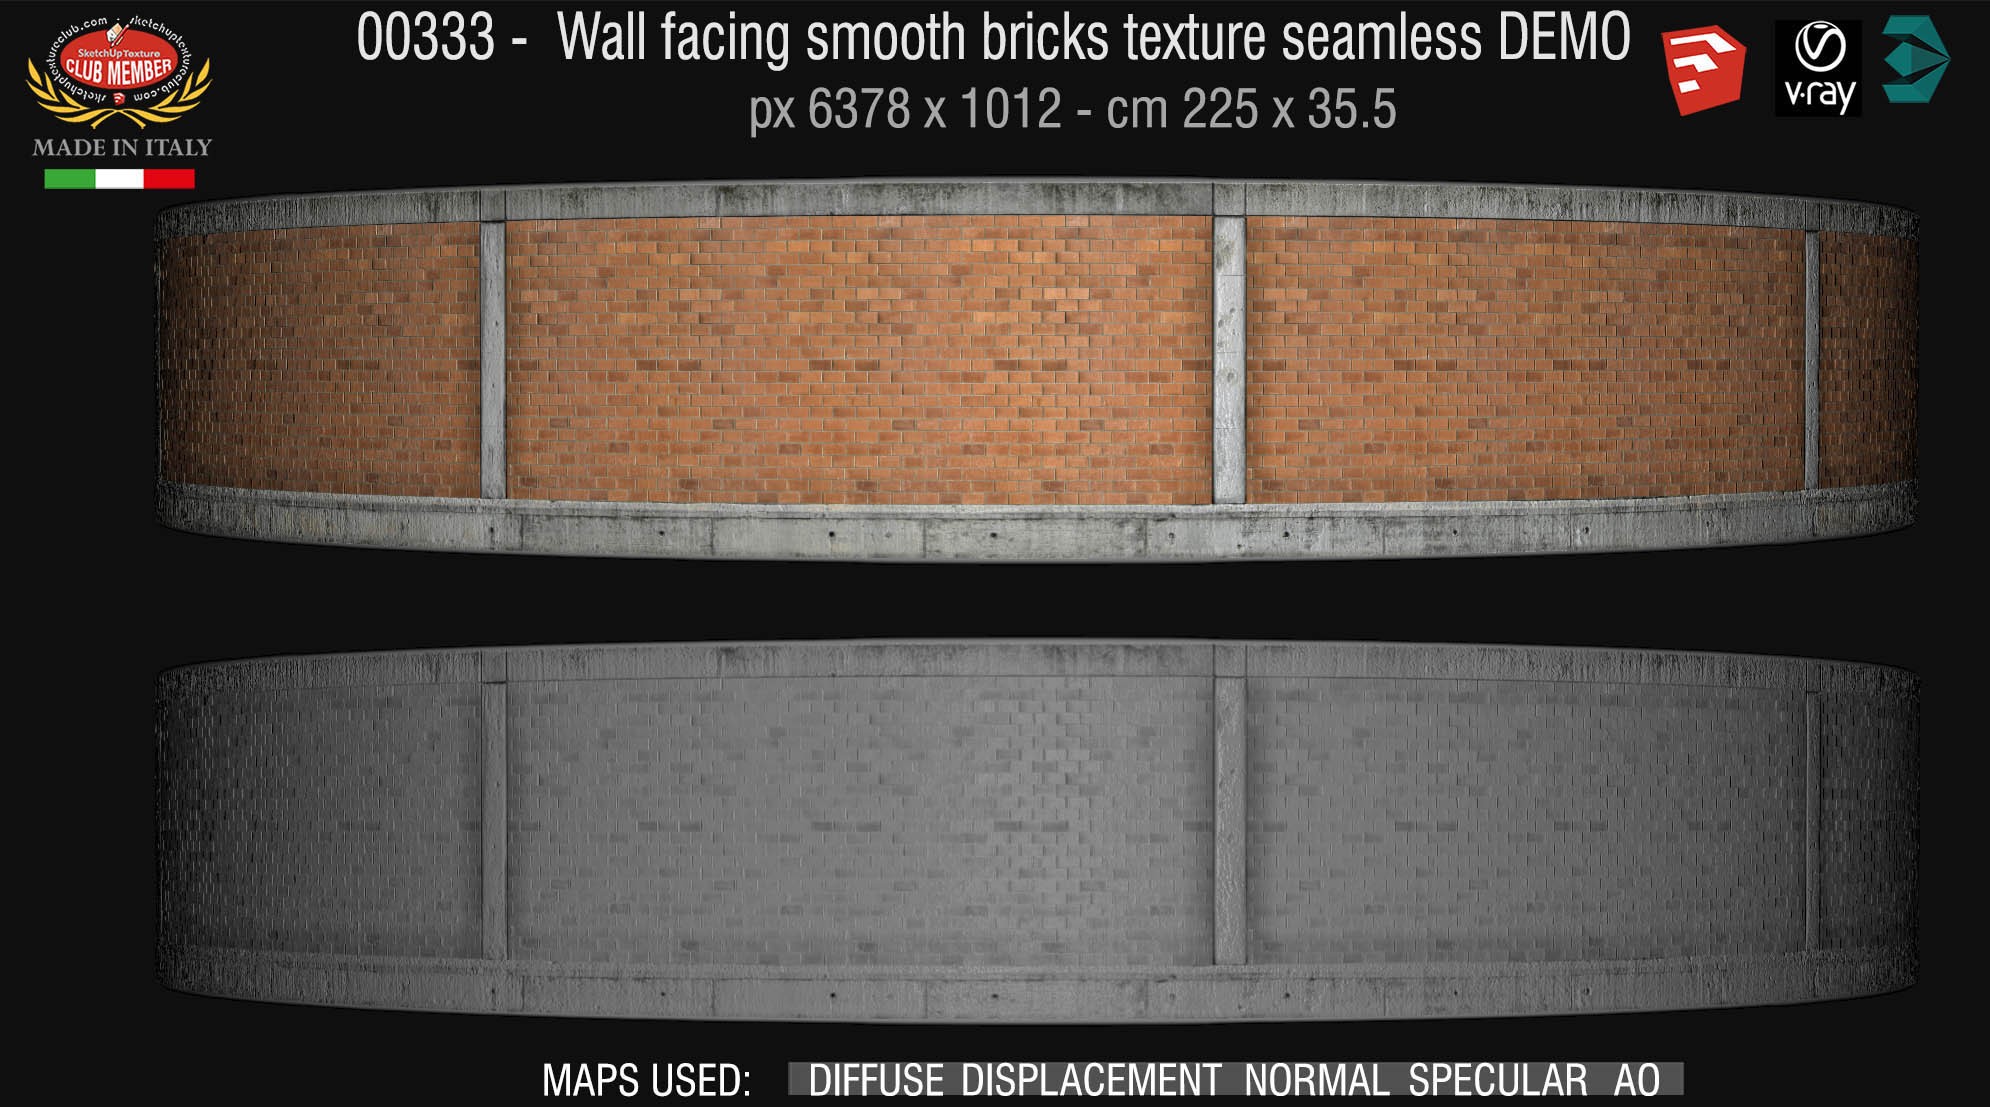 00333 Facing smooth bricks texture seamles + maps DEMO